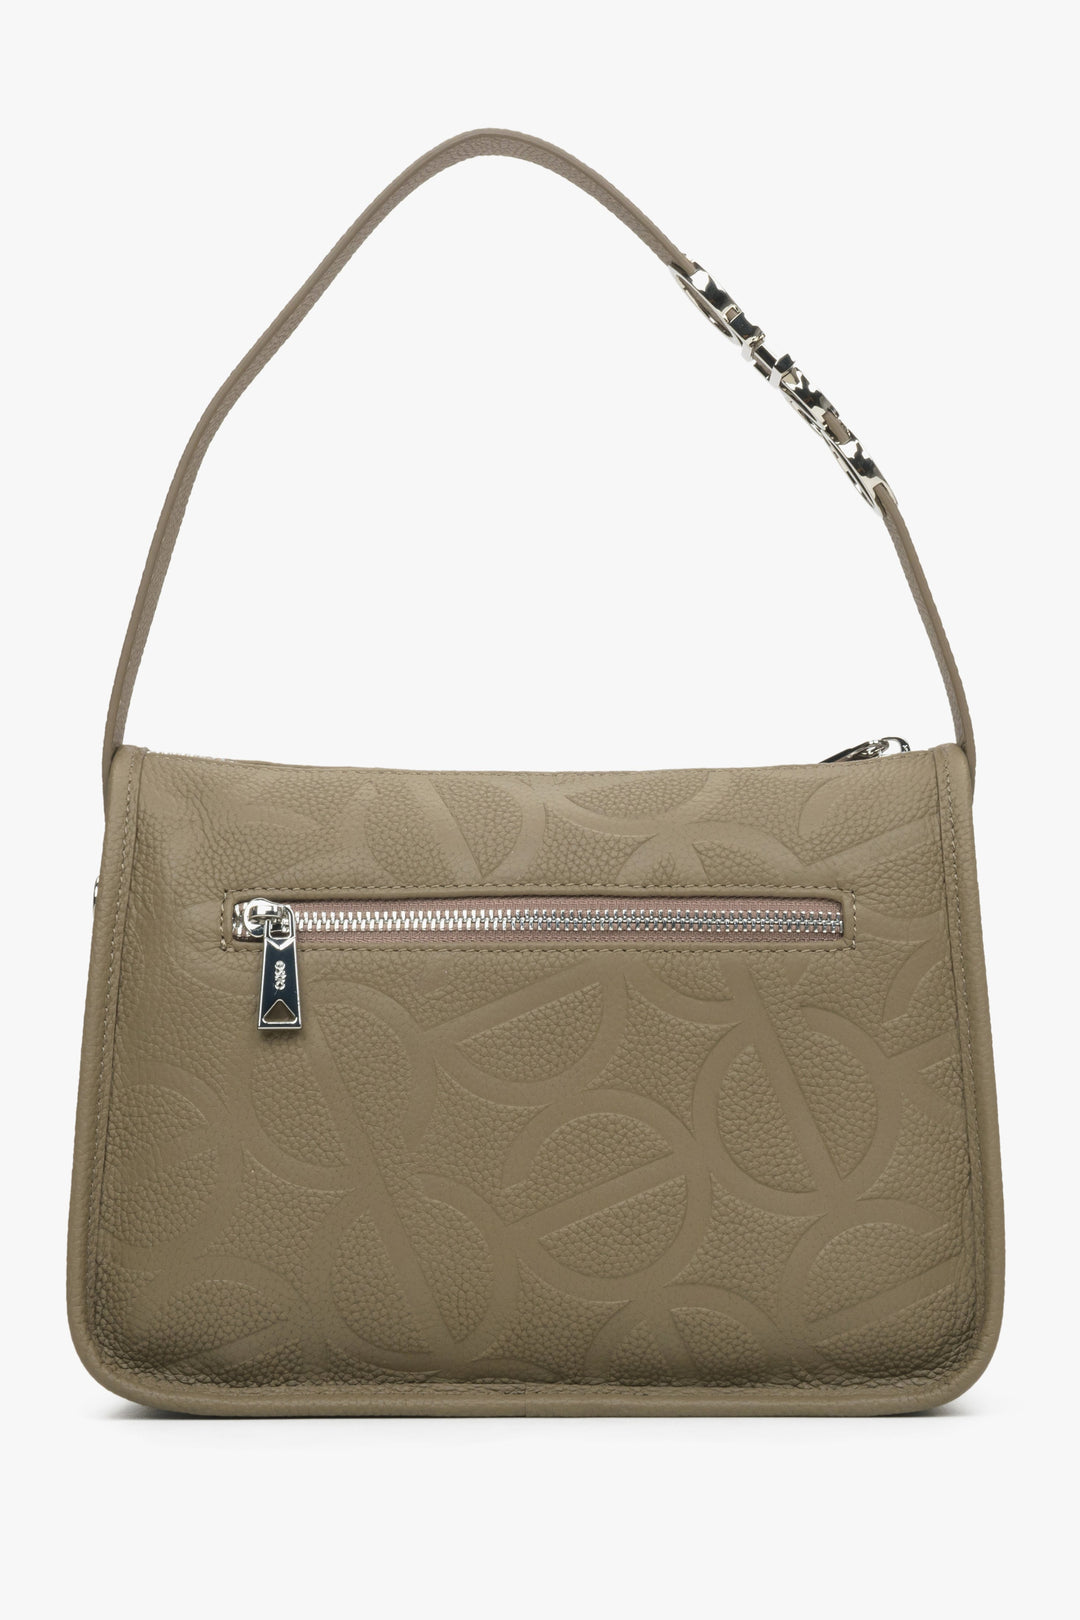 Grey and brown women's handbag - reverse.